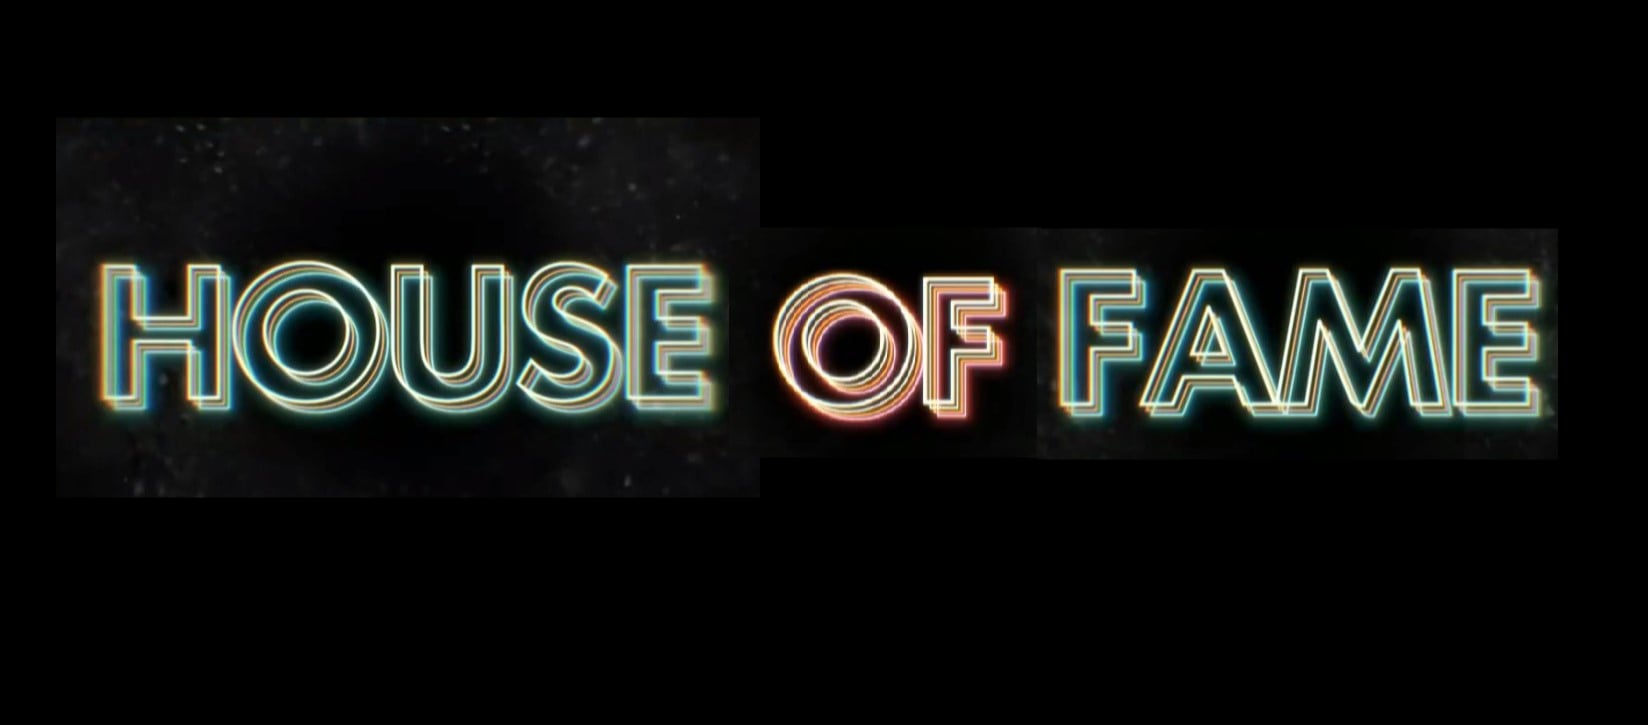 «House of fame»: Αυτοί συζητούν για την κριτική επιτροπή - Φωτογραφία 1